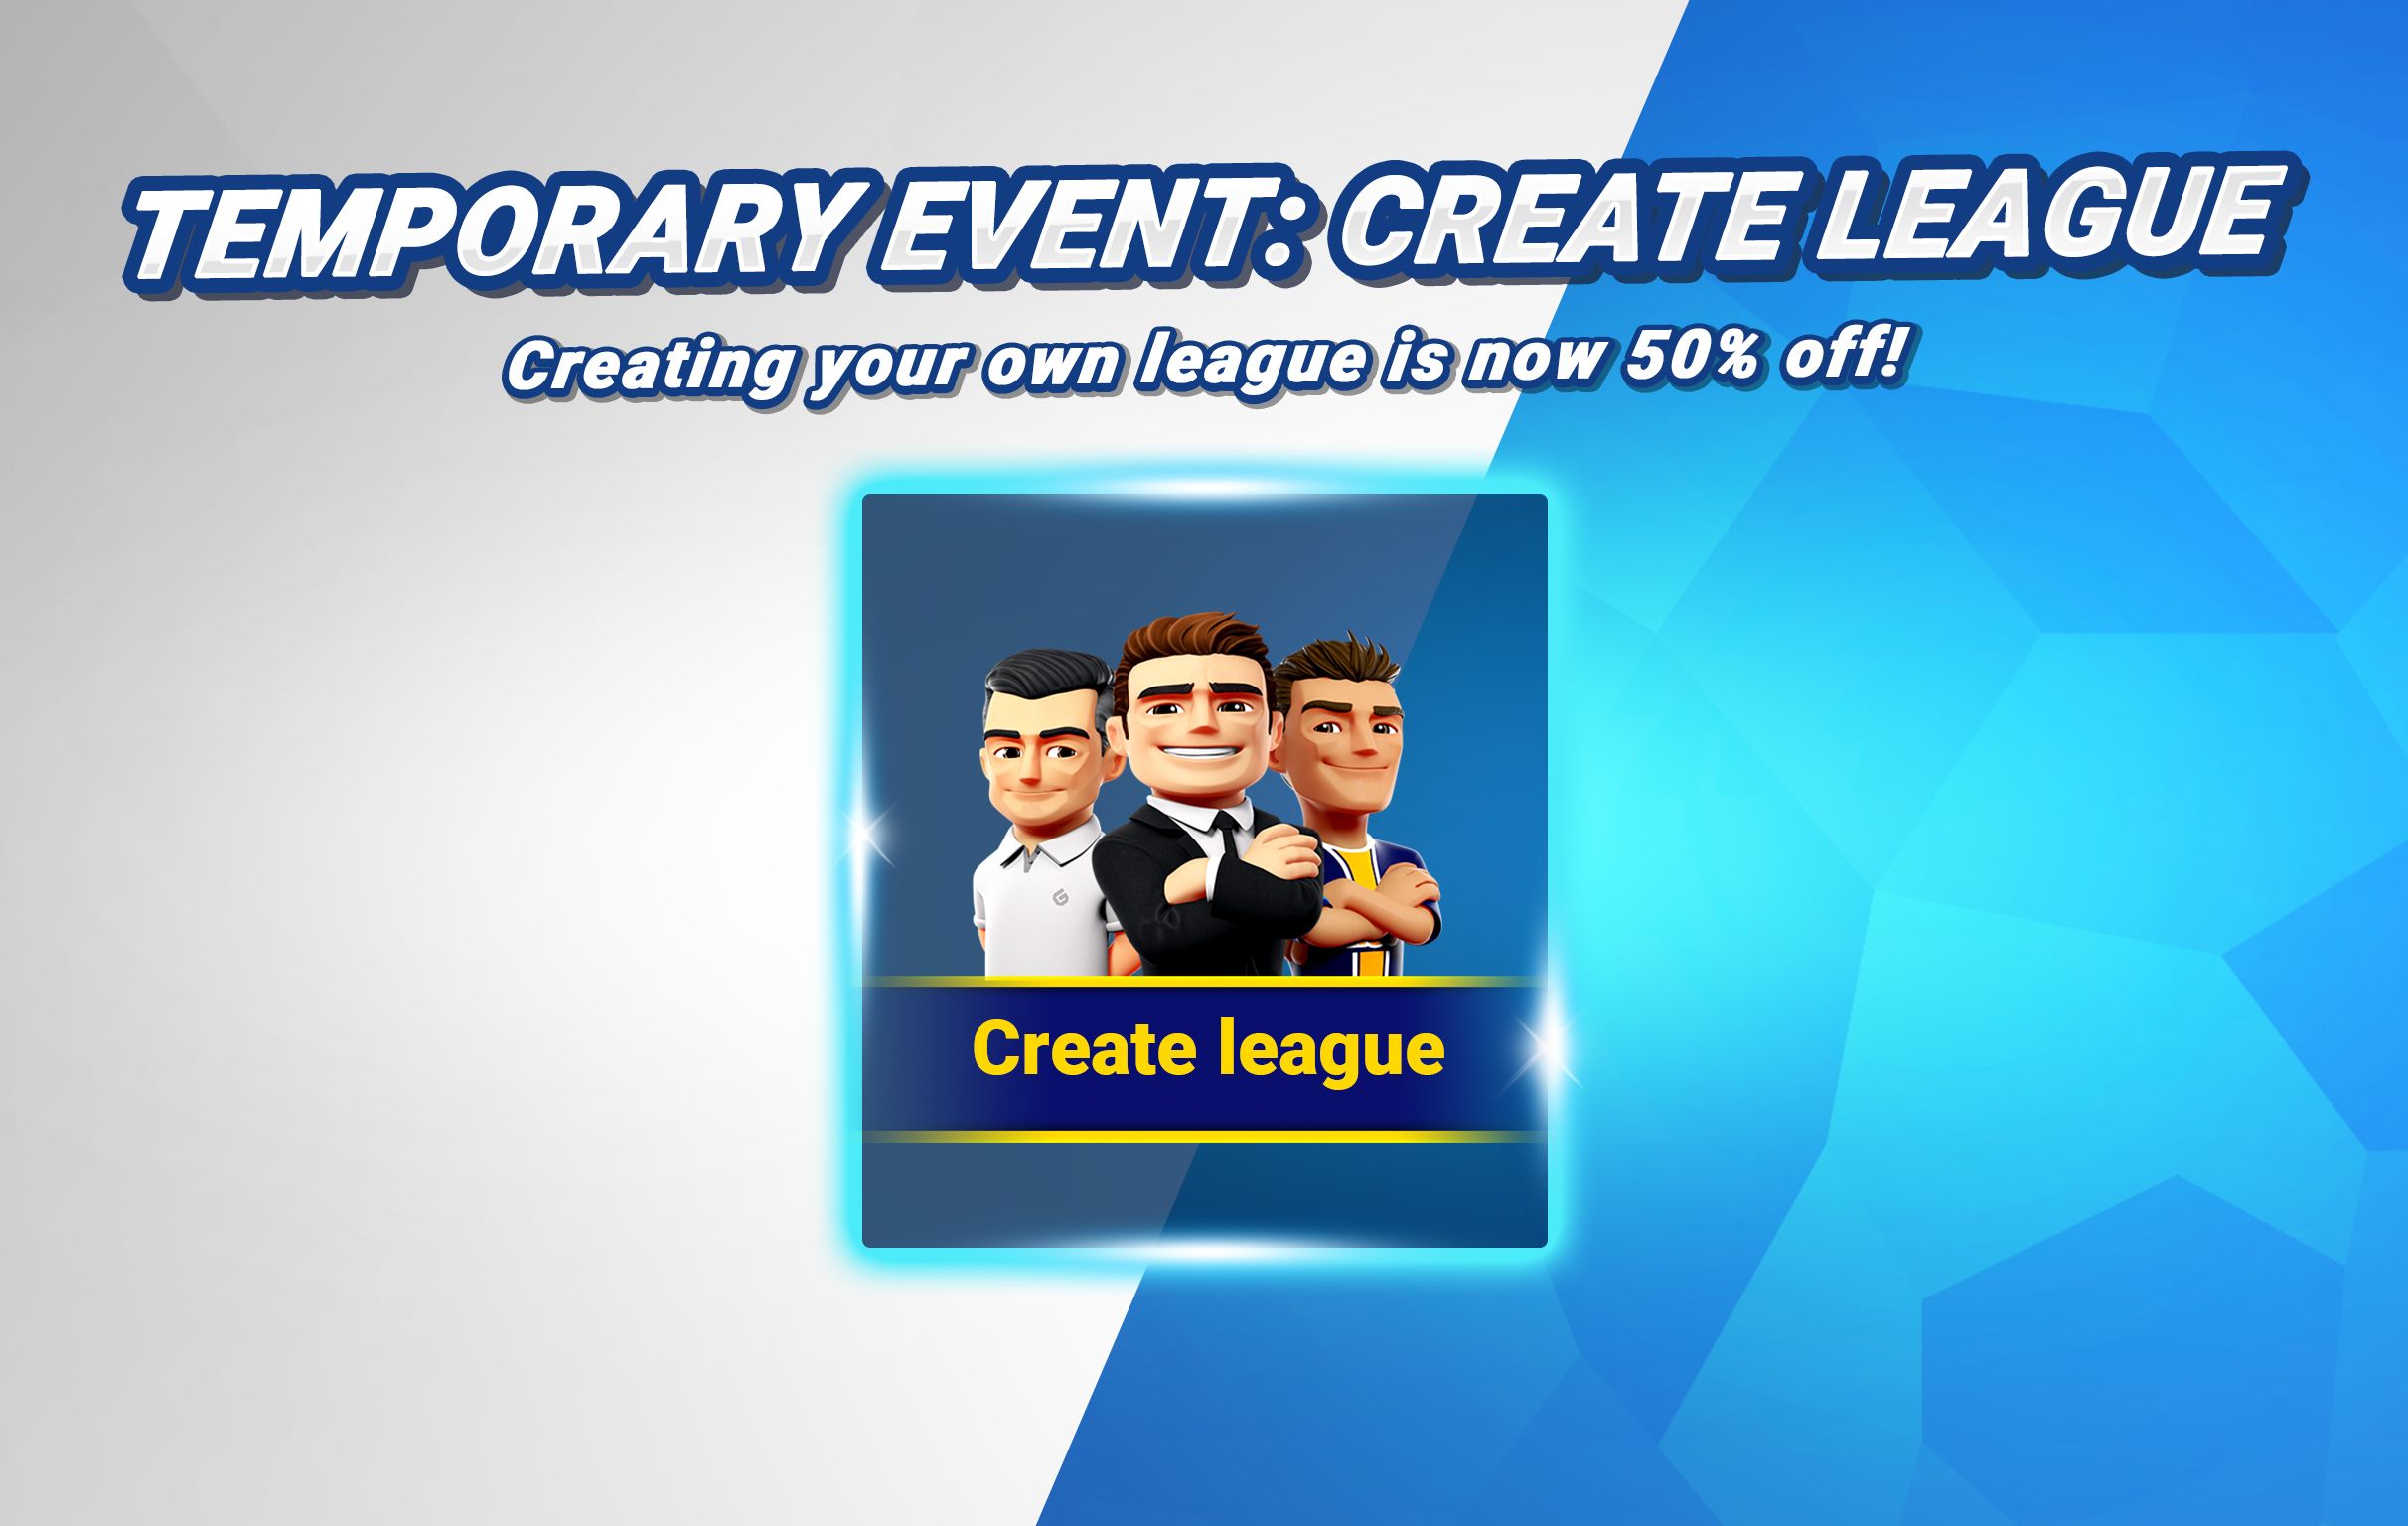 Create League_UK.jpg